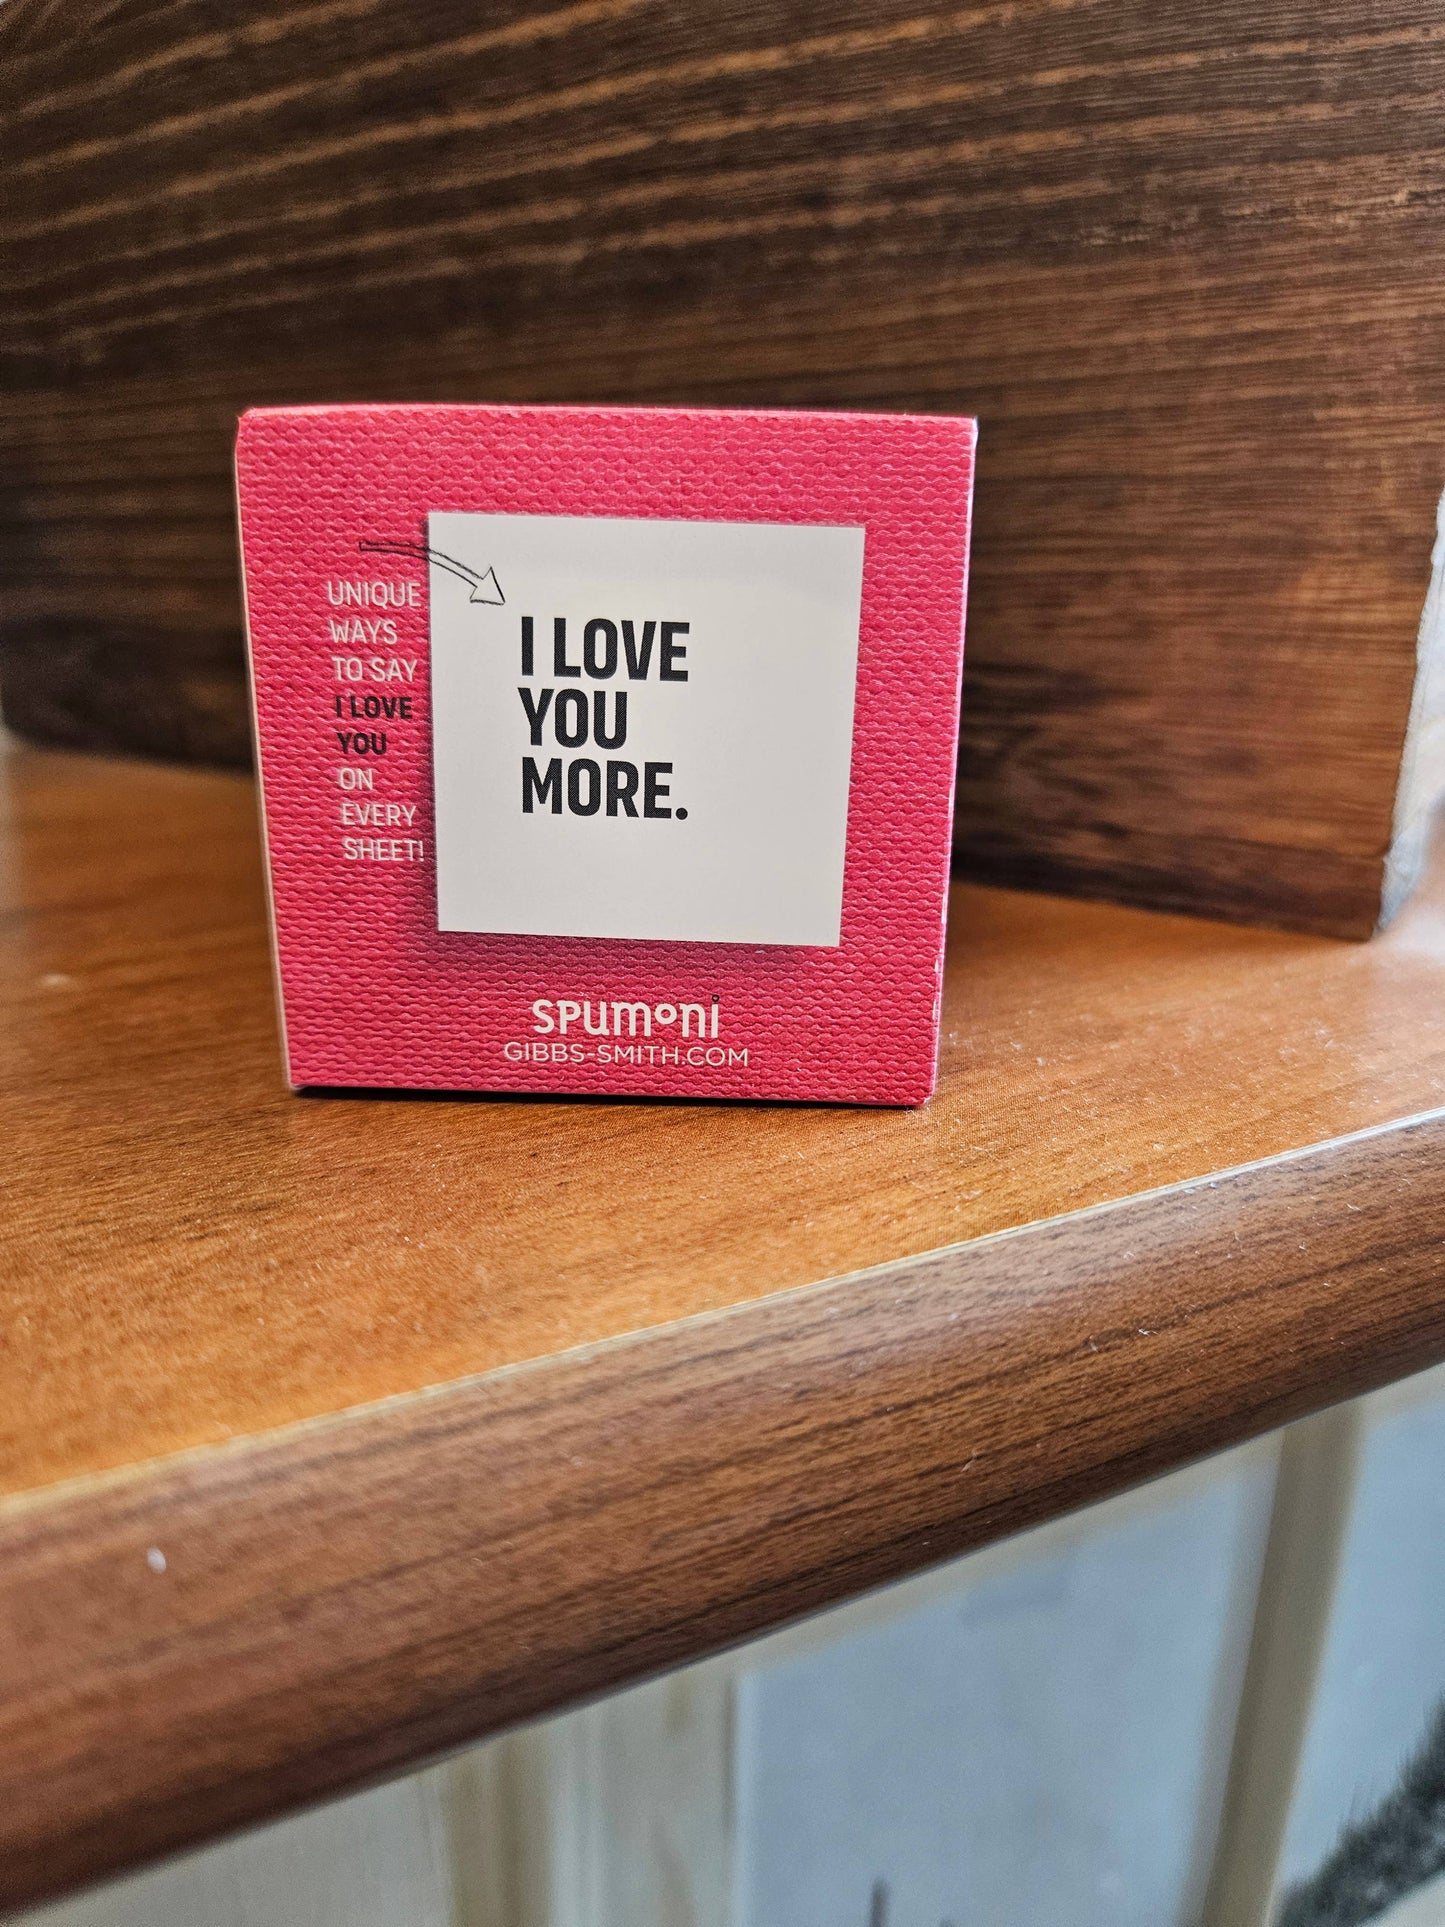 Gibbs Smith - Say I Love You Sticky Notes, (Valentines)